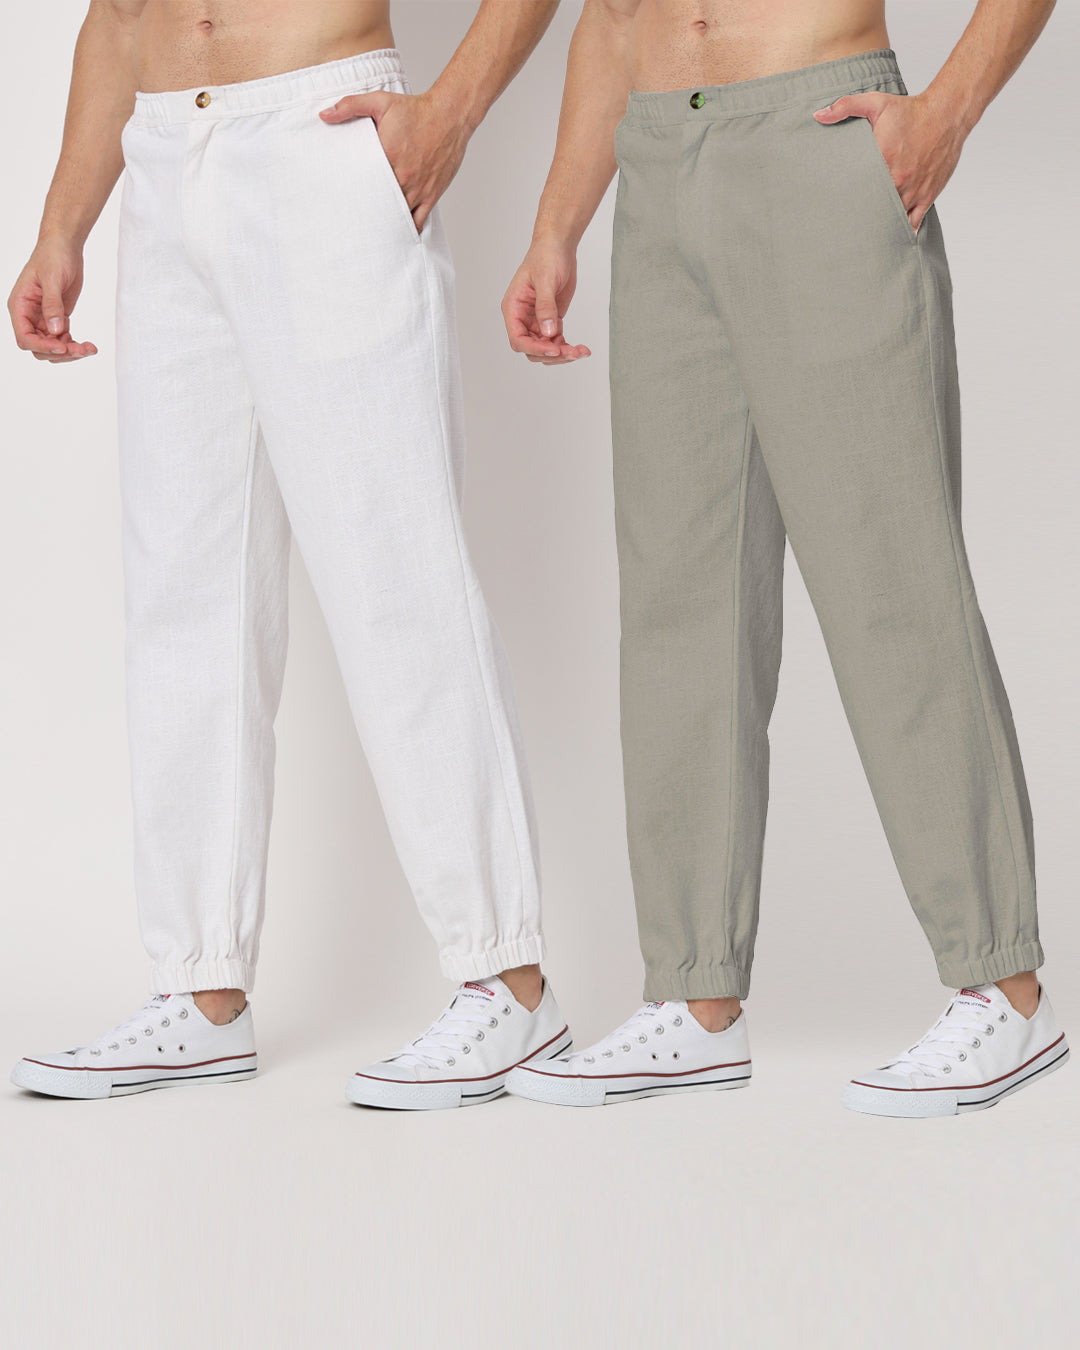 Combo: White & Grey Jog Men's Pants - Set of 2